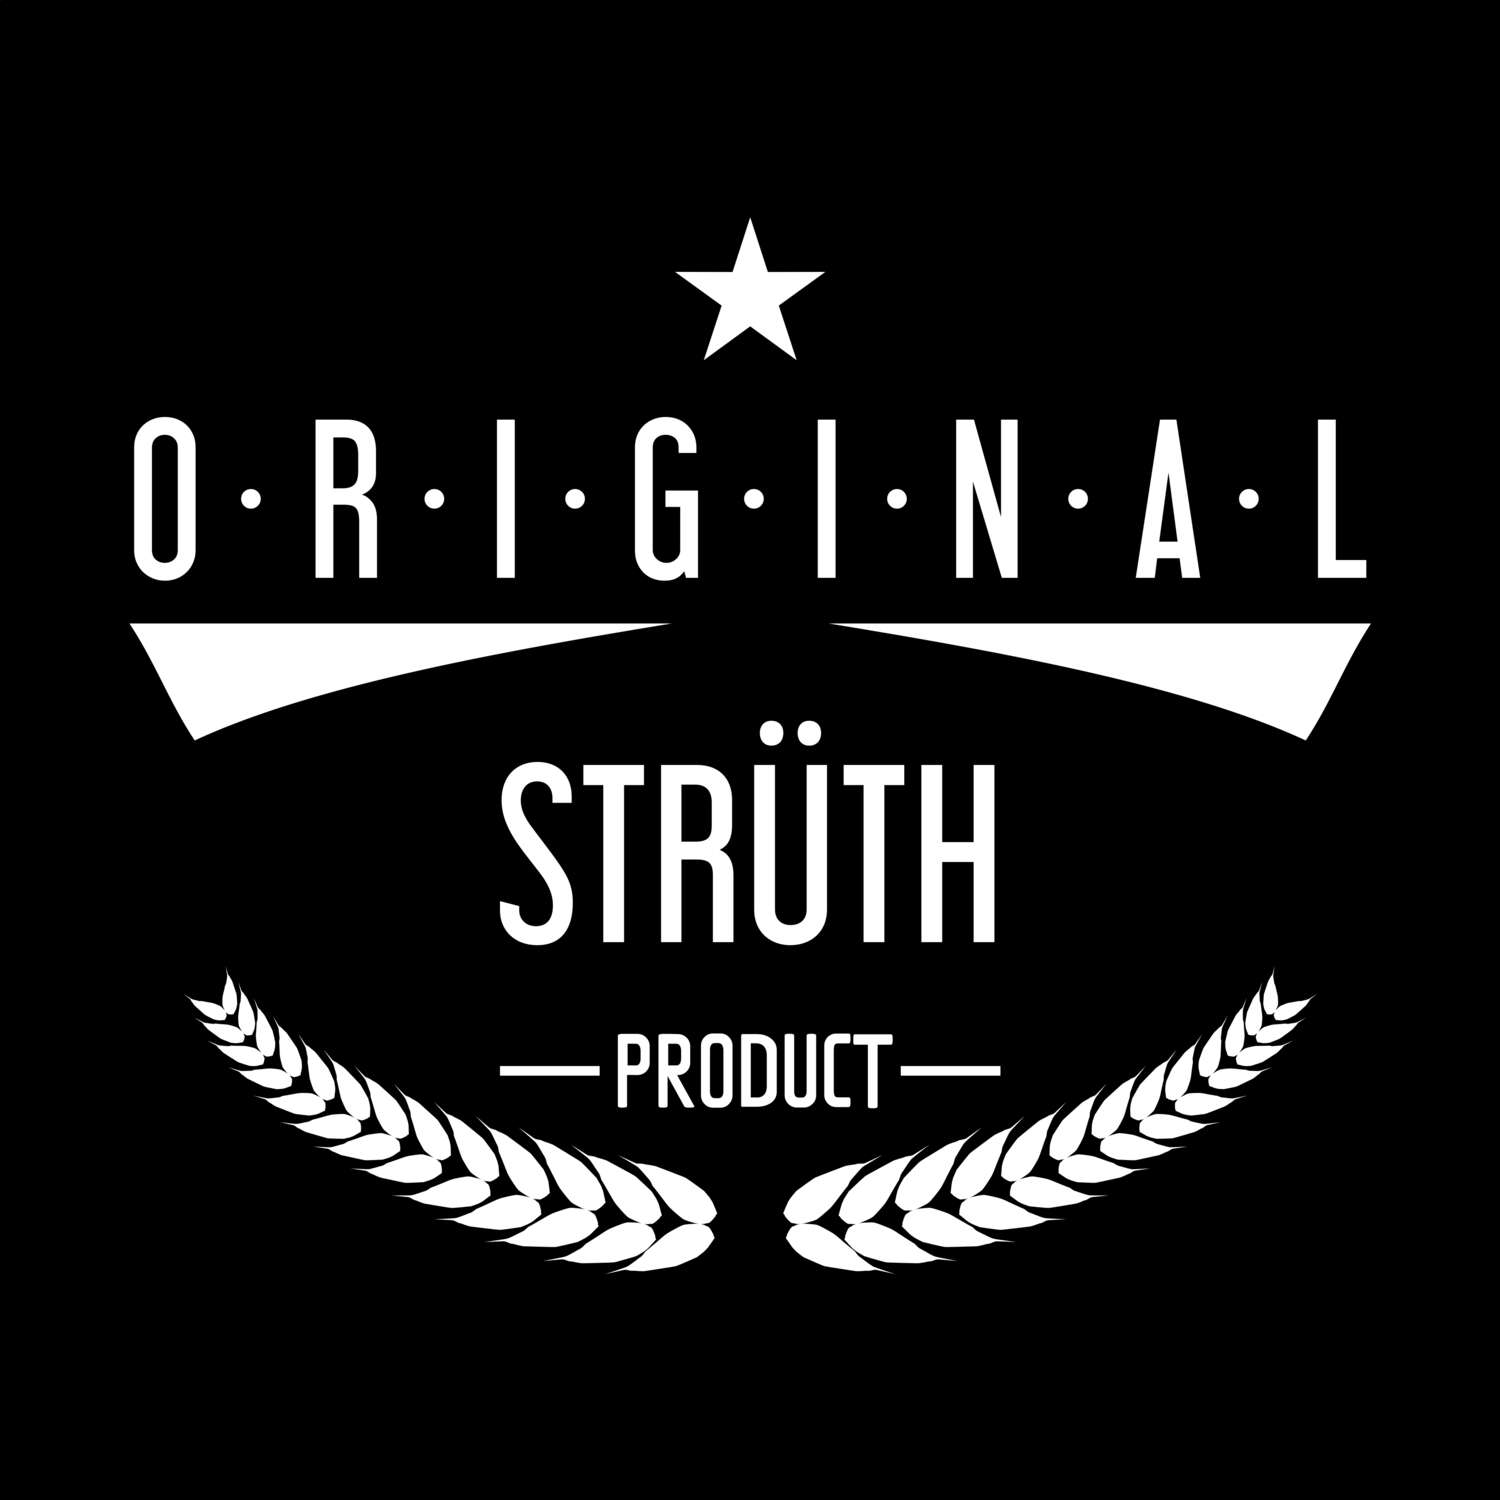 Strüth T-Shirt »Original Product«